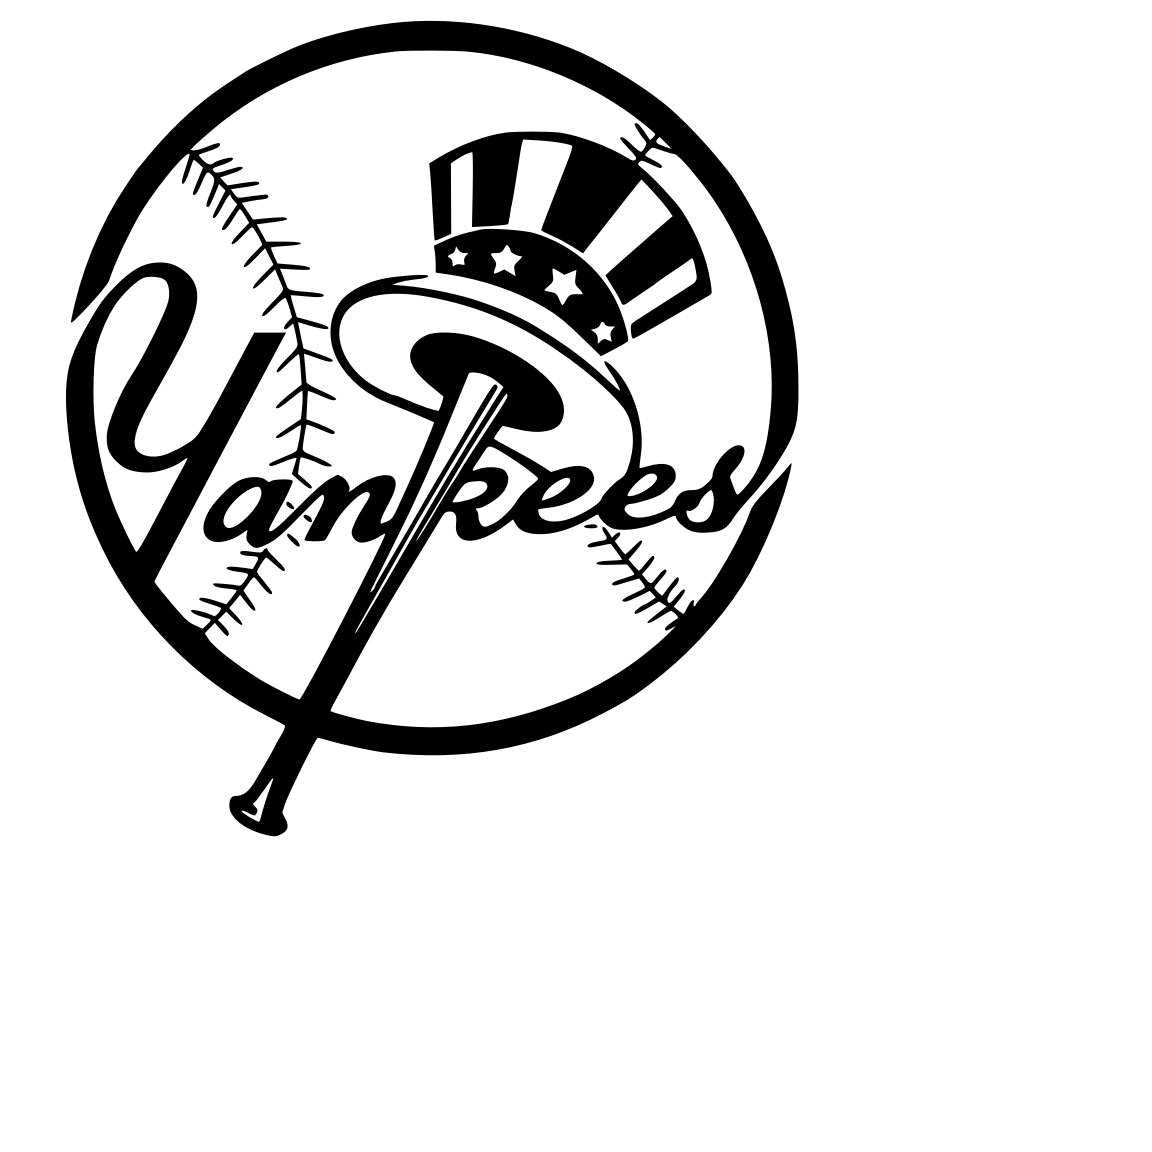 New York Yankees Team Logo - Dropbox.svg. Vinyl. New York Yankees, MLB, Baseball